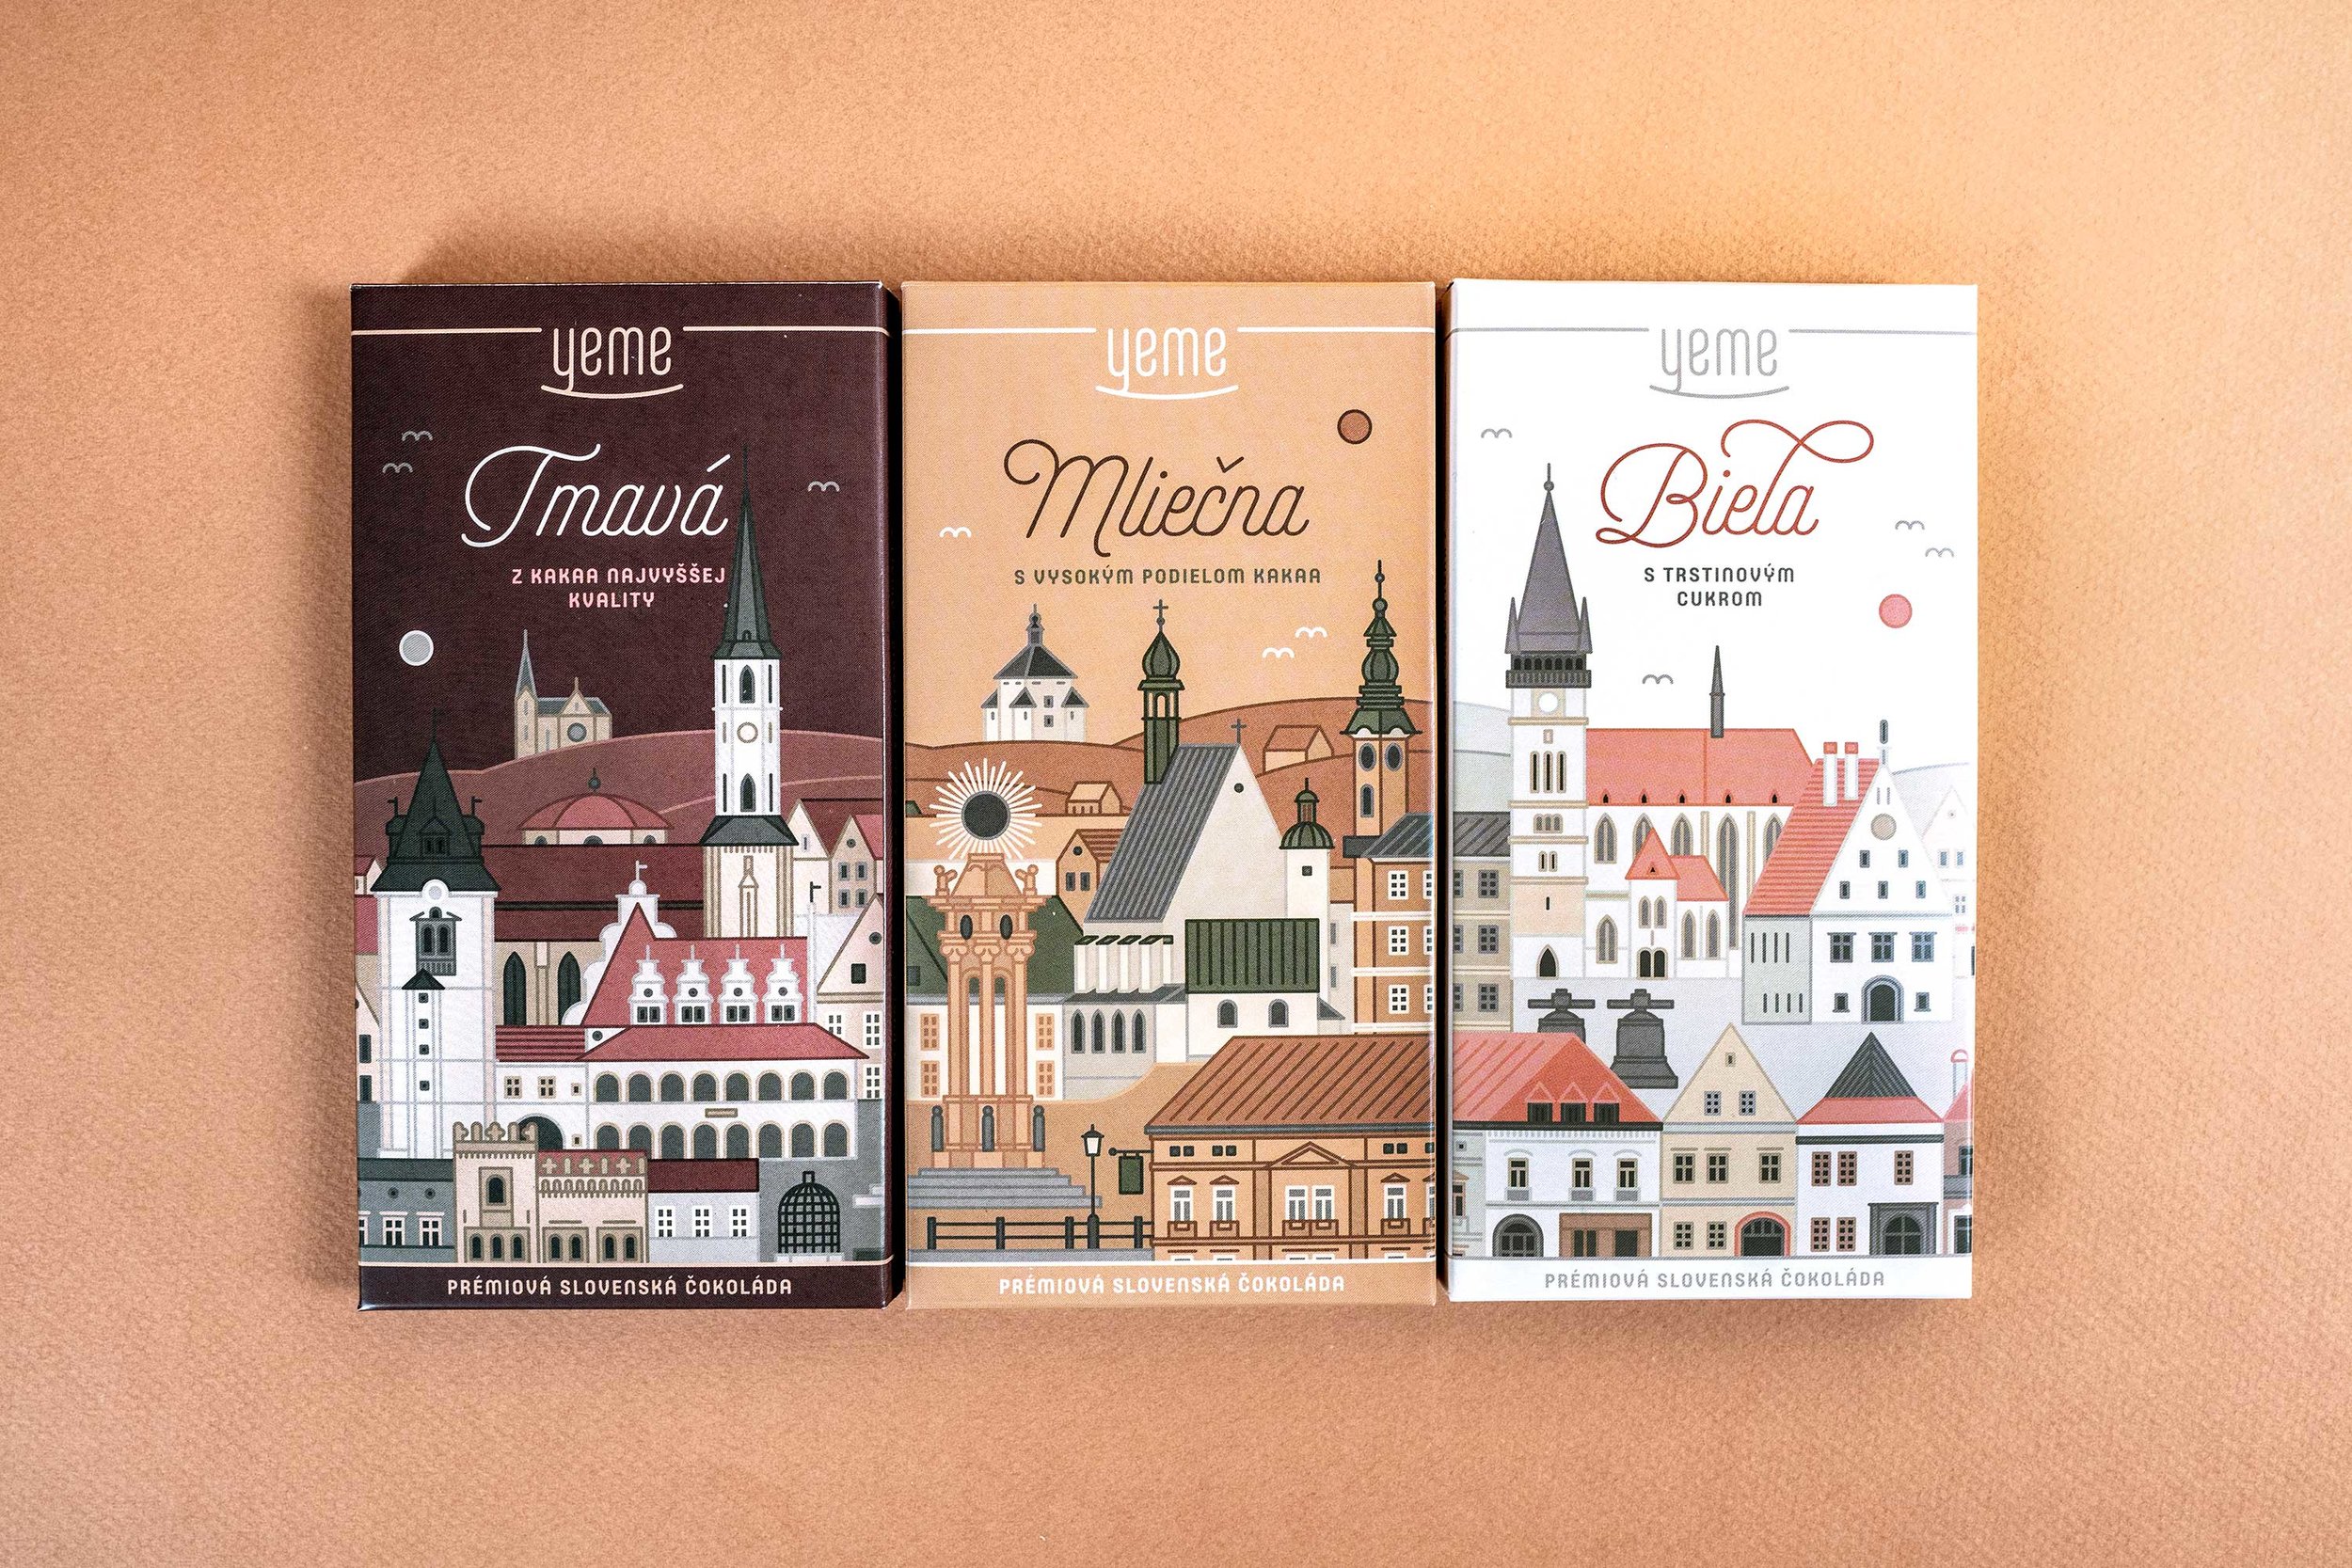 Packaging Design for Premium Slovak Chocolates